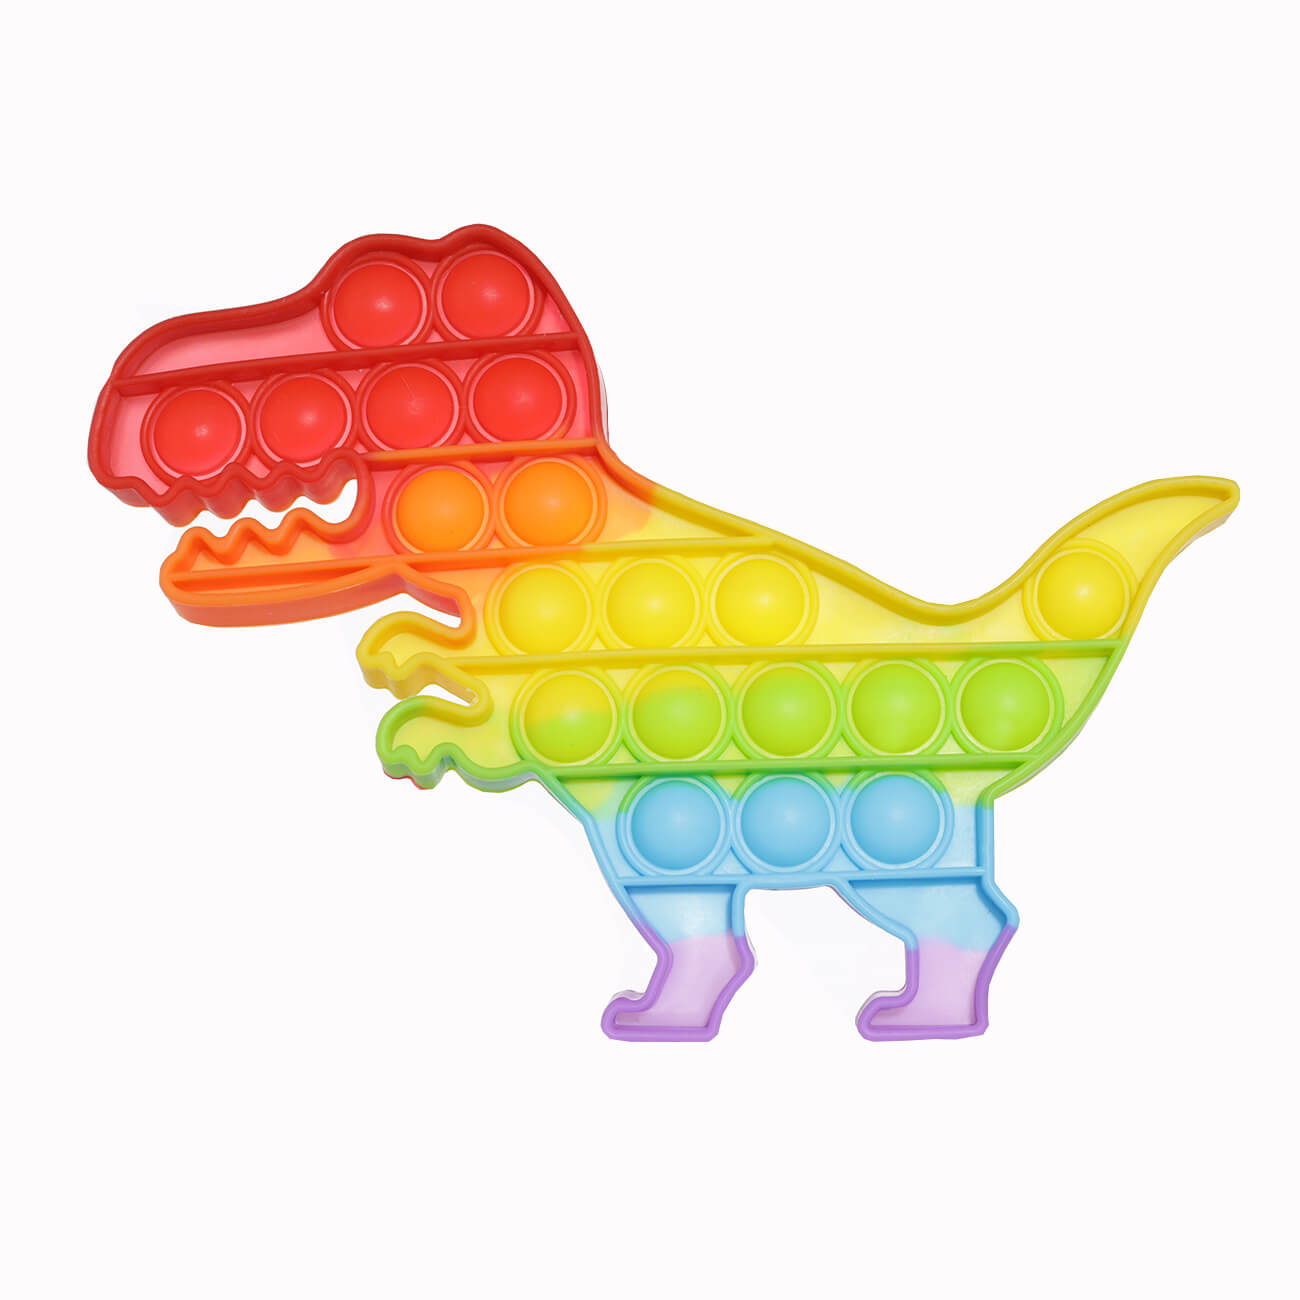 Игрушка-антистресс Pop-it, 19х14 см, силикон, цветная, Динозавр, Pop-it игрушка антистресс 3 см резина зеленая дракон antistress